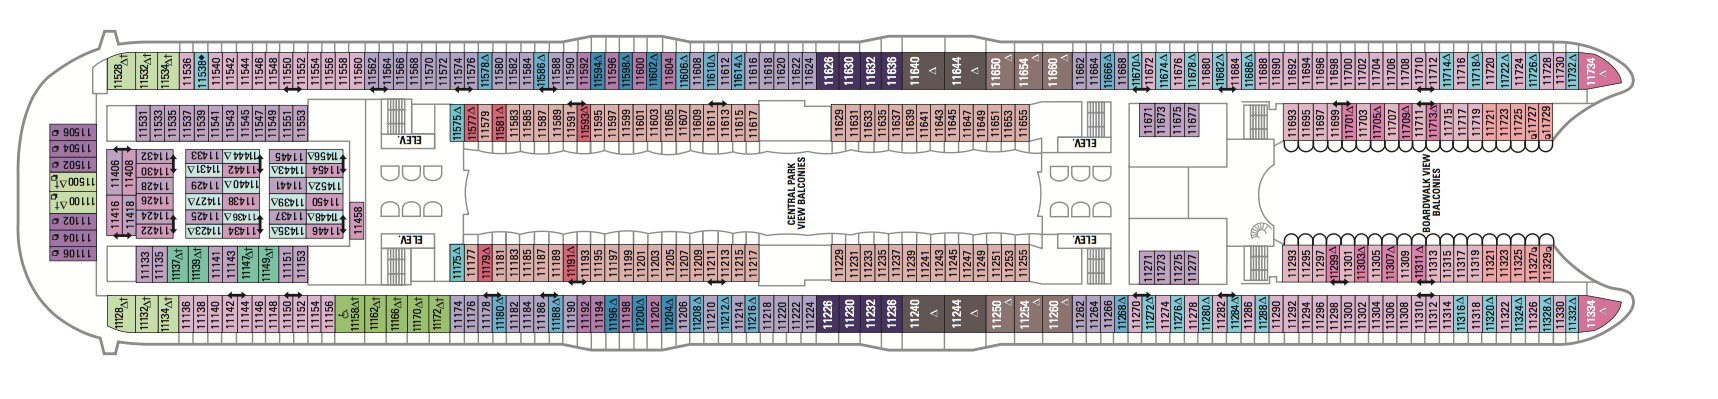 1689884780.3836_d484_Royal Caribbean International Symphony of the Seas Deck Plans Deck 11.png